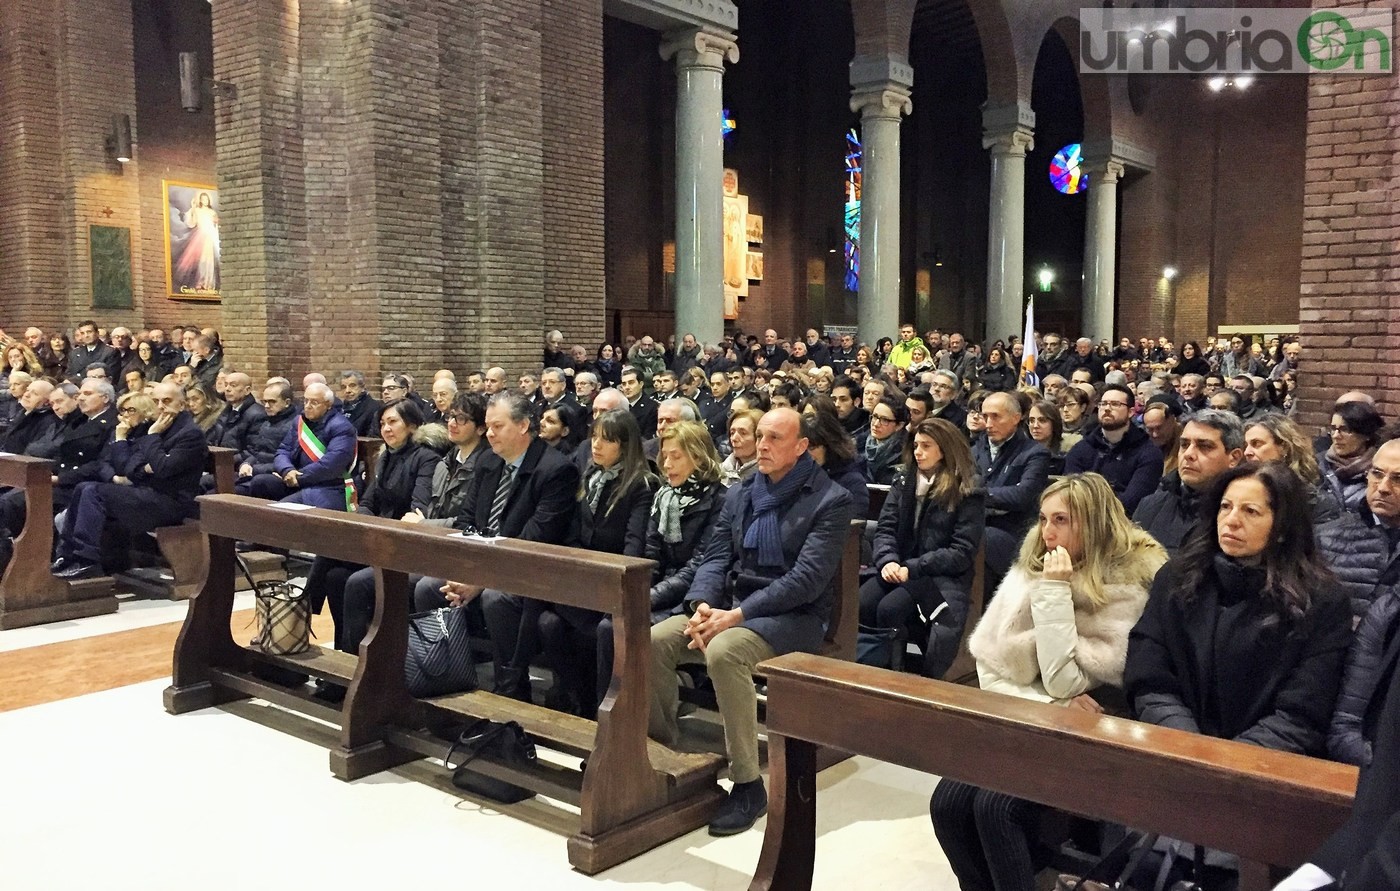 Funerali Maurizio Santoloci - 9 gennaio 2017 (6)